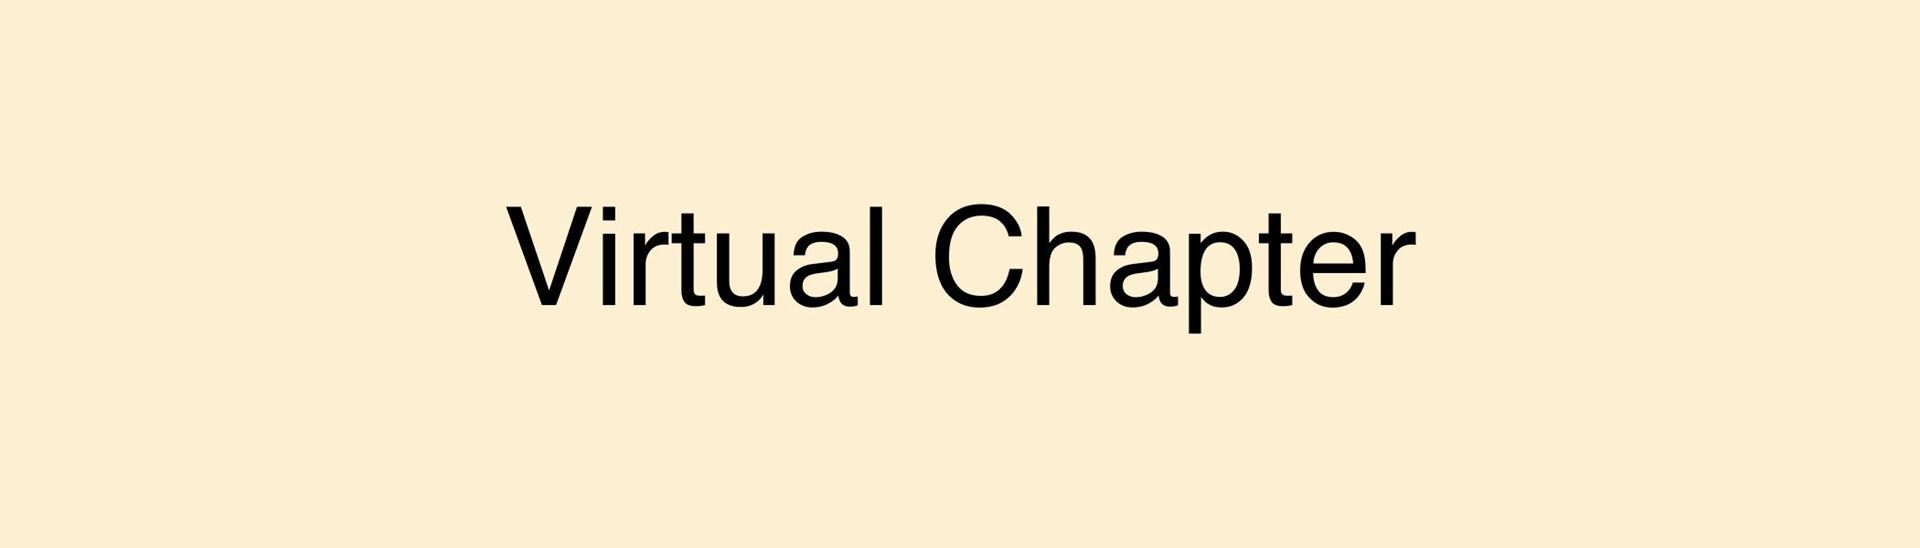 Virtual Chapter